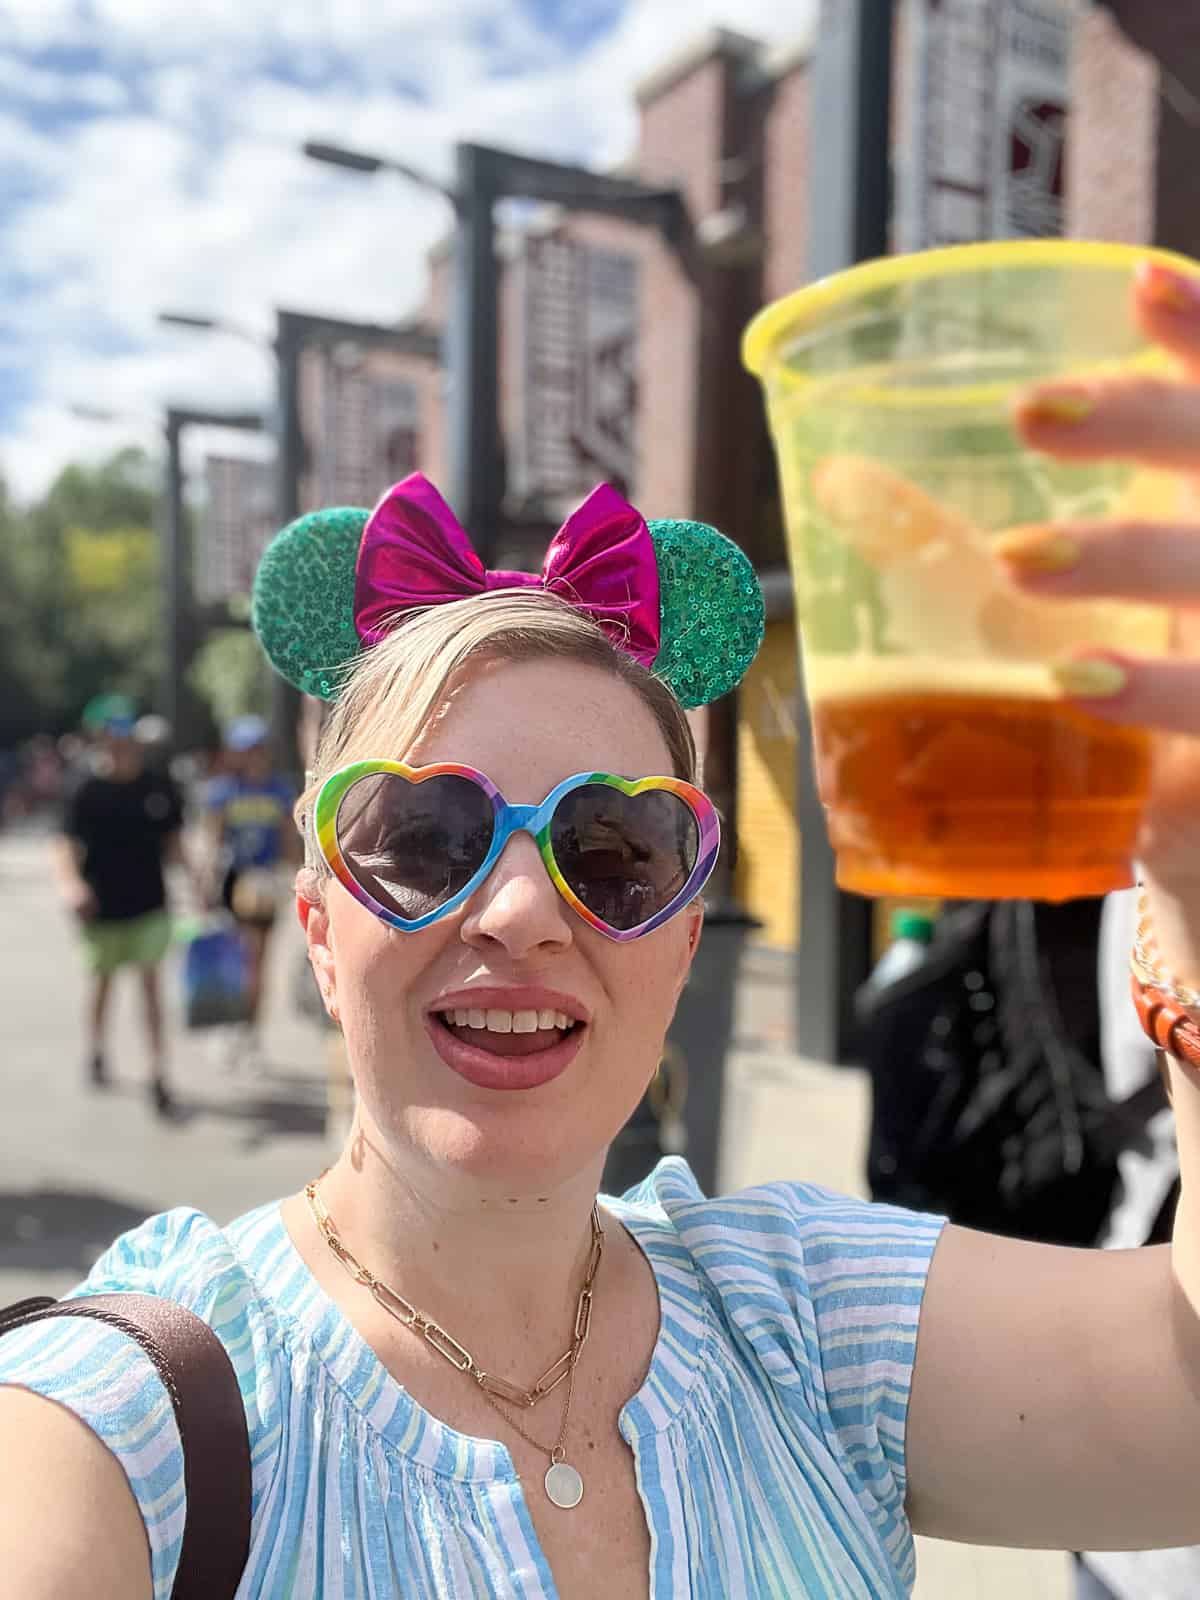 Jenna Passaro Disney blogger wearing a cute dress to Disneyland with heart sunglasses and Mickey ears